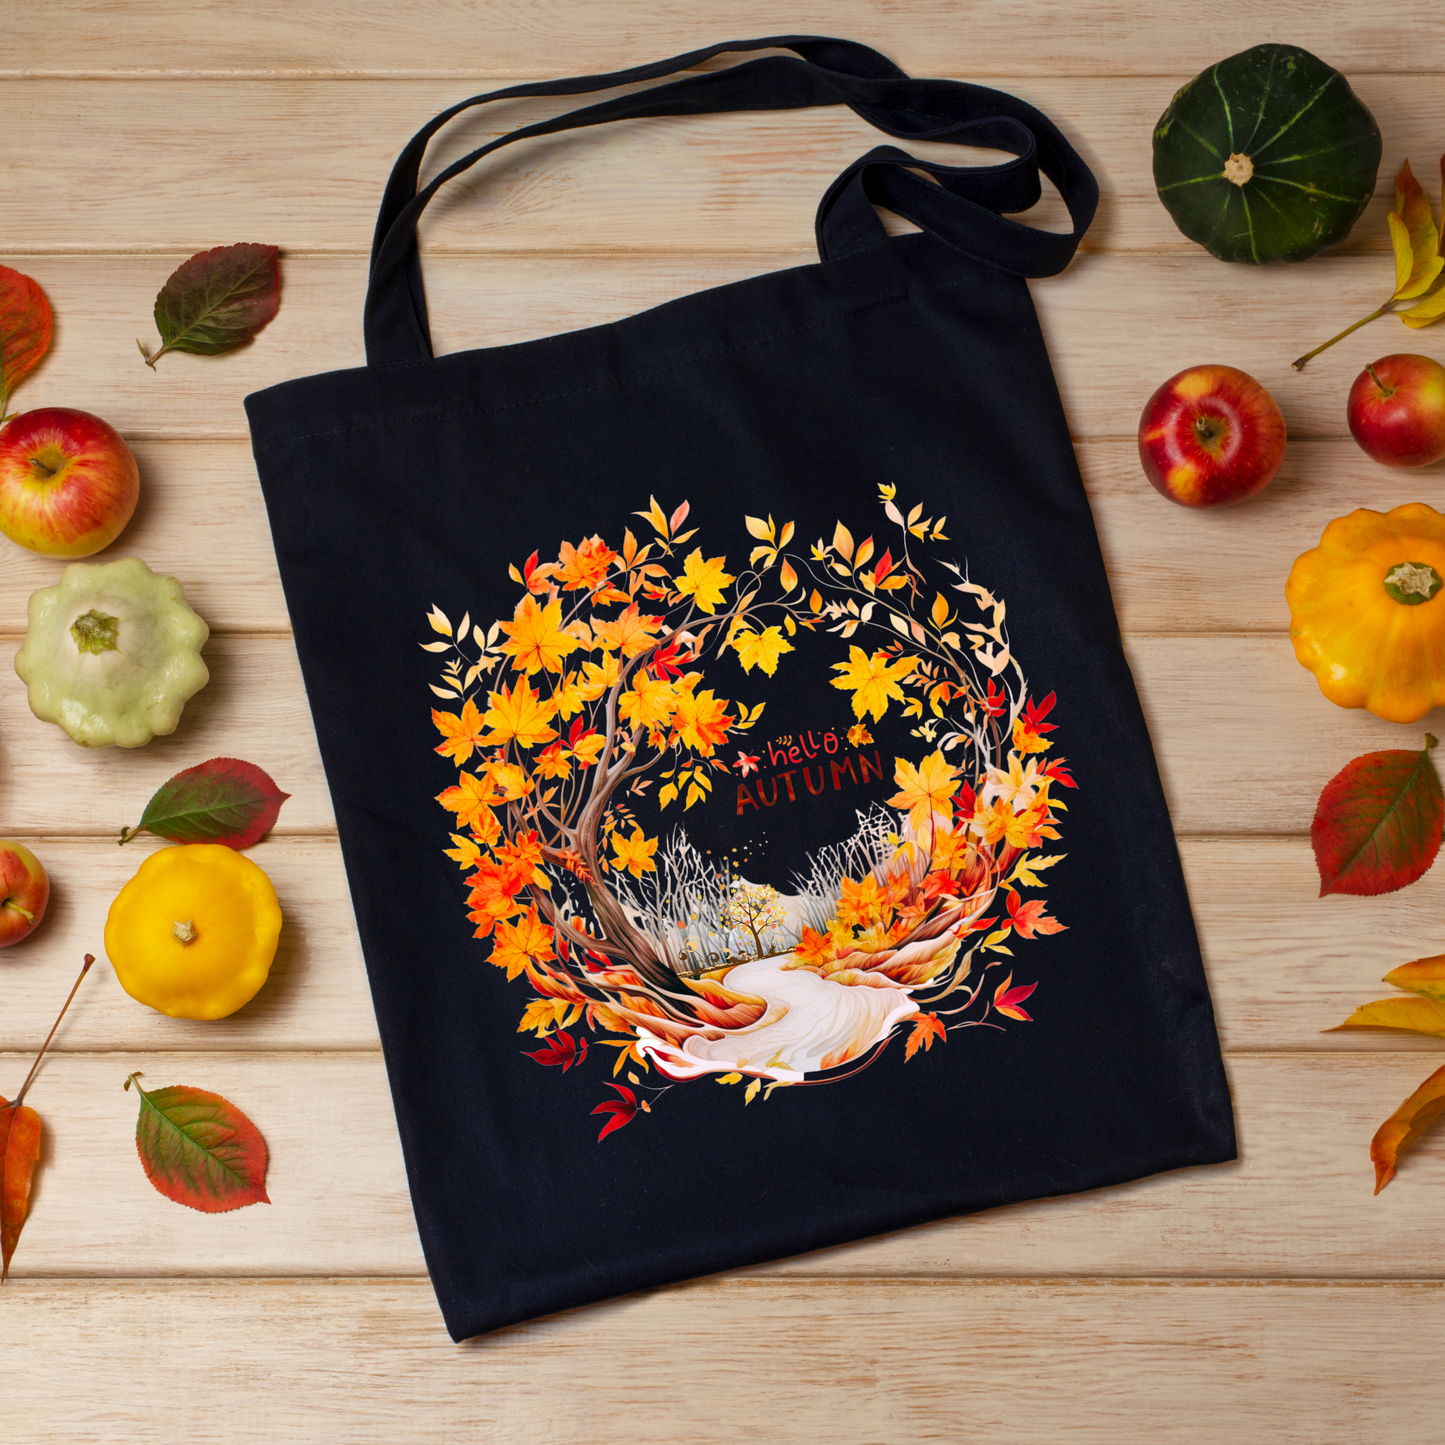 Fall Into Style: Fall Tote Bag | Hello Autumn Tote Bag | Autumn Shopping Bag | Woven Tote Bag | Eco-Friendly Bags   